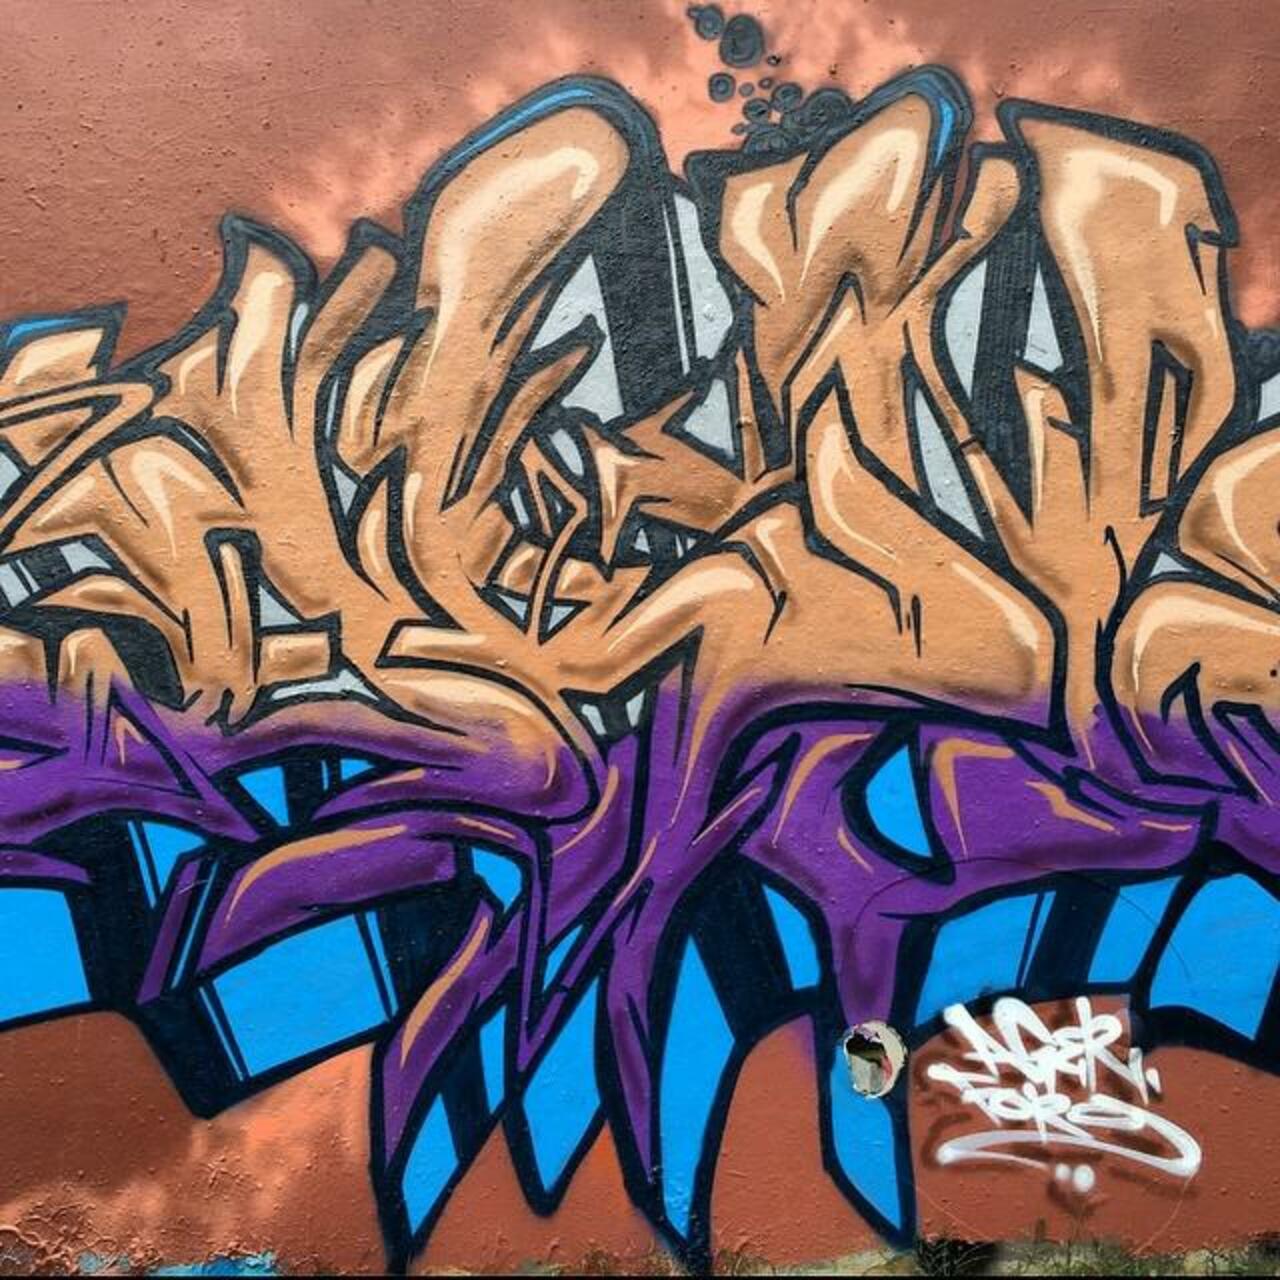 #hiphop Detail.
 #graffiti #streetart #art #urbanart #design #bicycle #graff #cityart #bmx #hiphop #dj #brisbanestr… http://t.co/XbDzTGJRzq